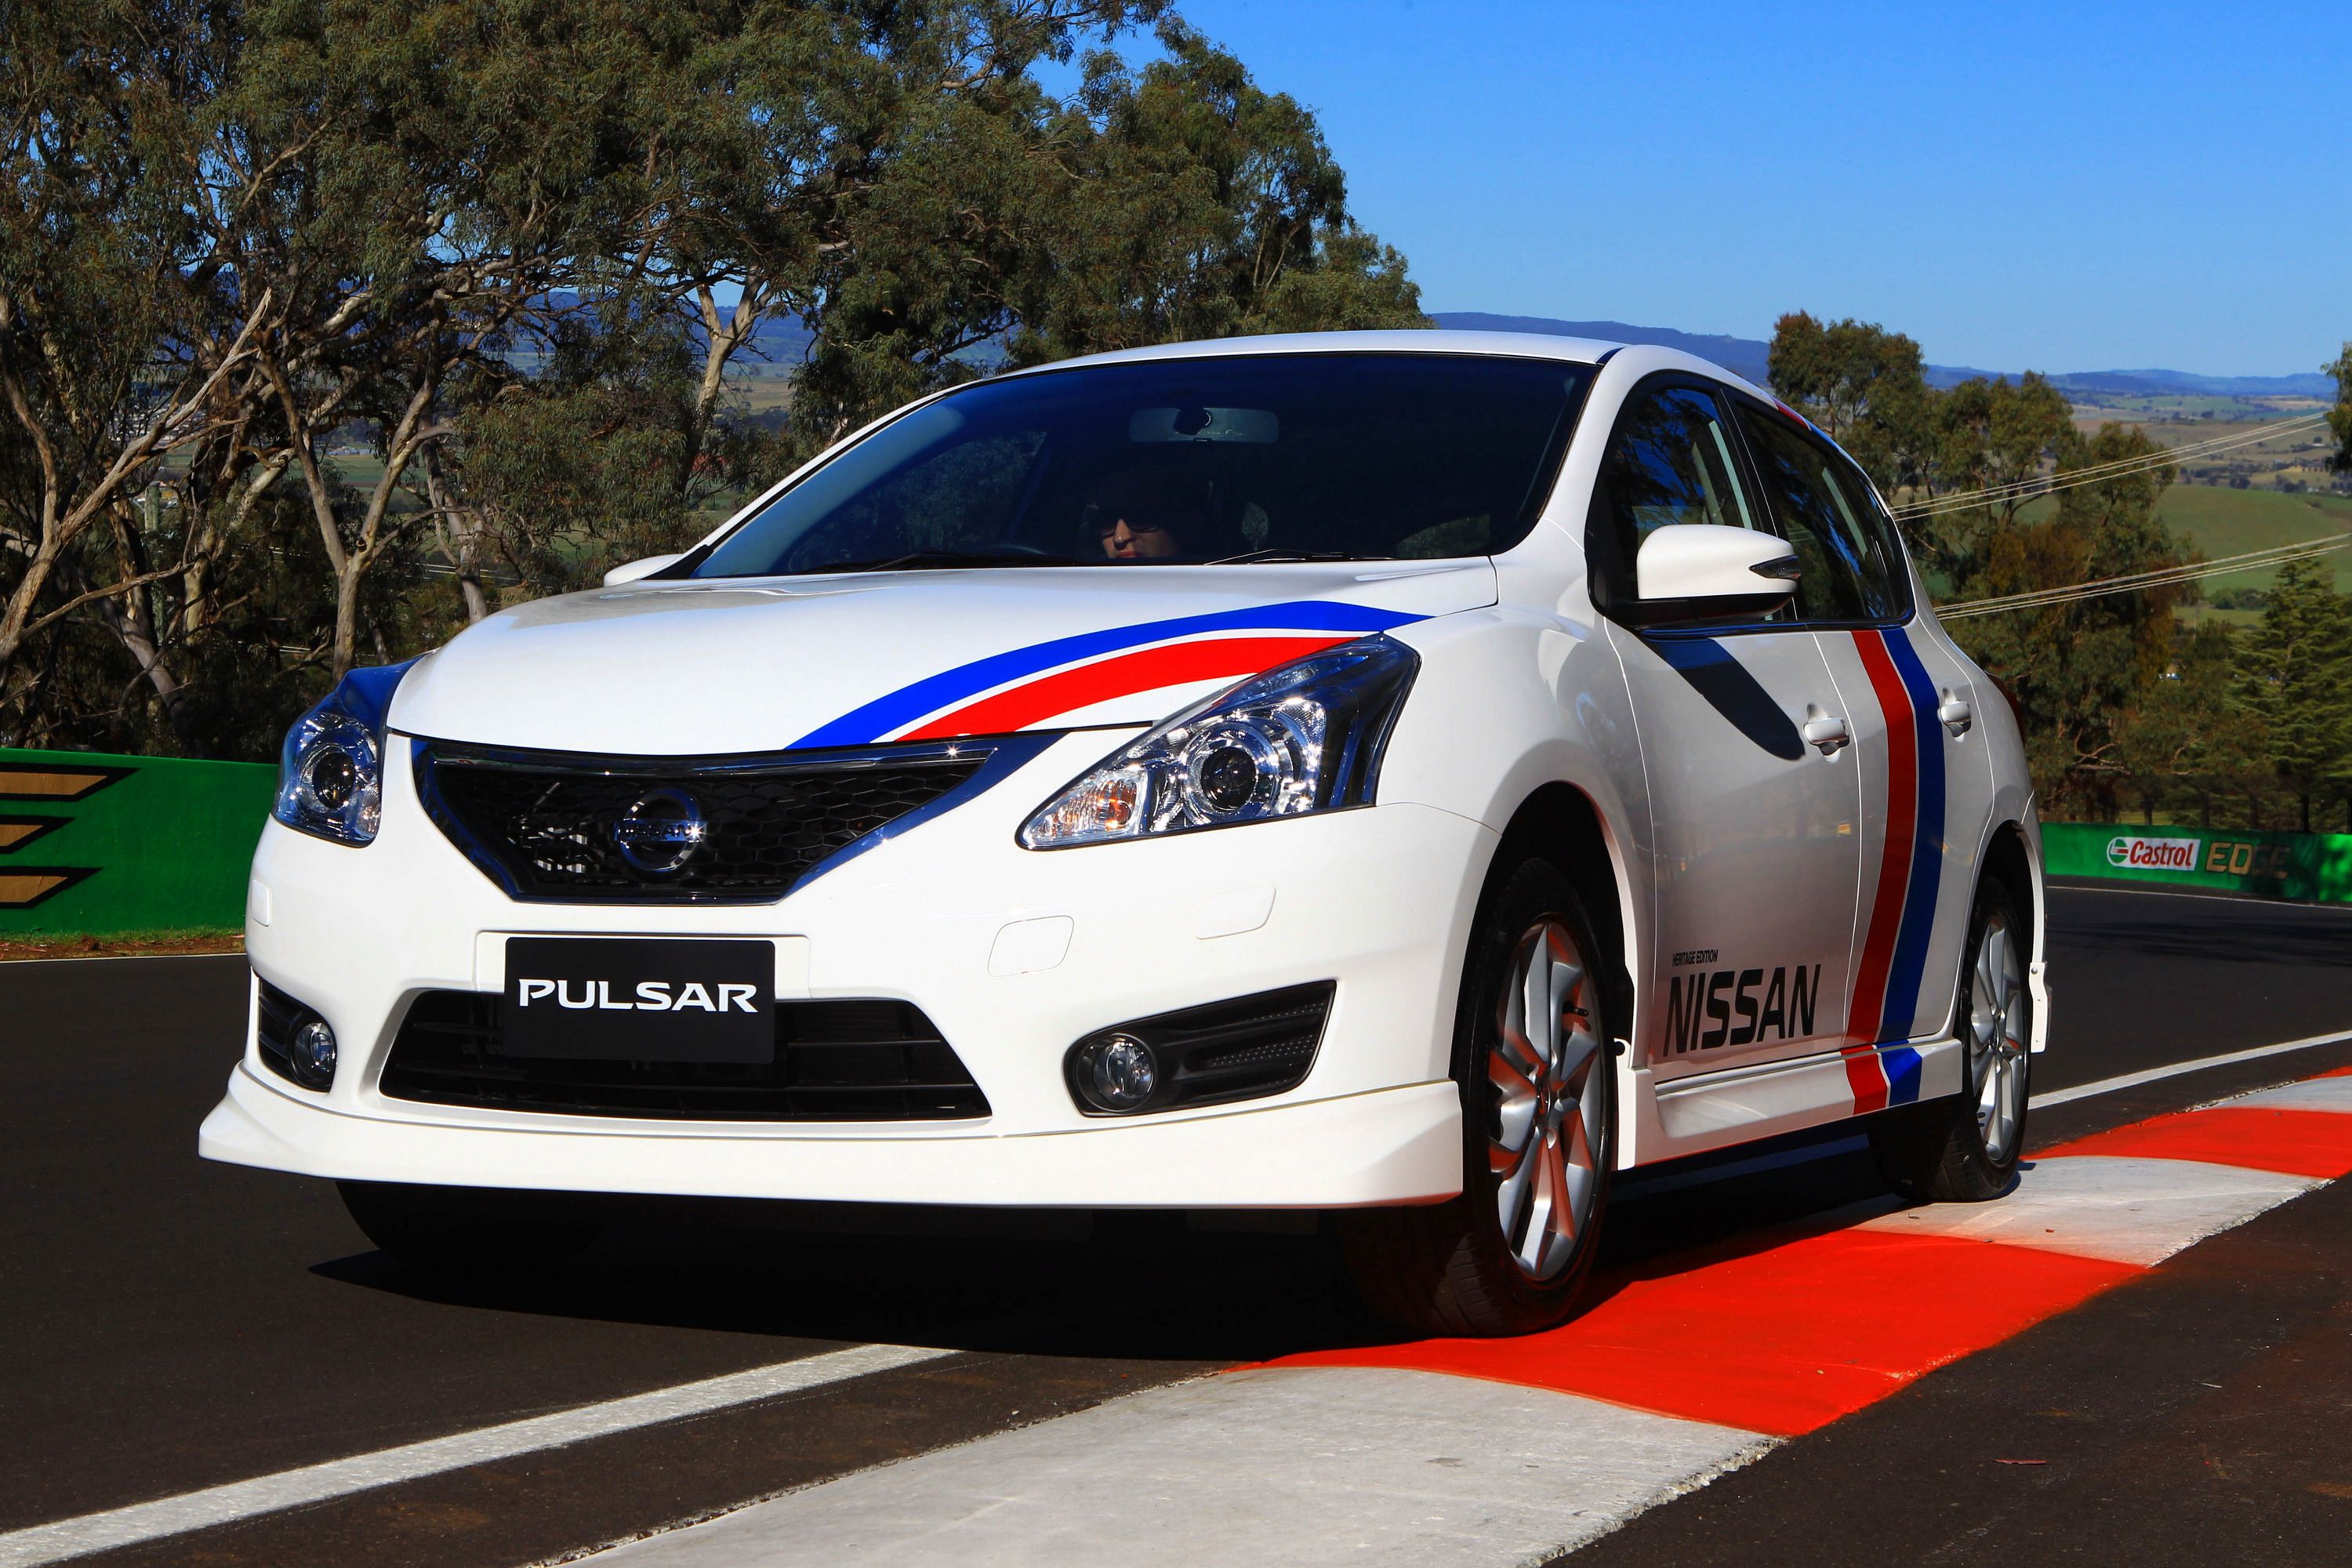 2014 Nissan Pulsar SSS Heritage Edition